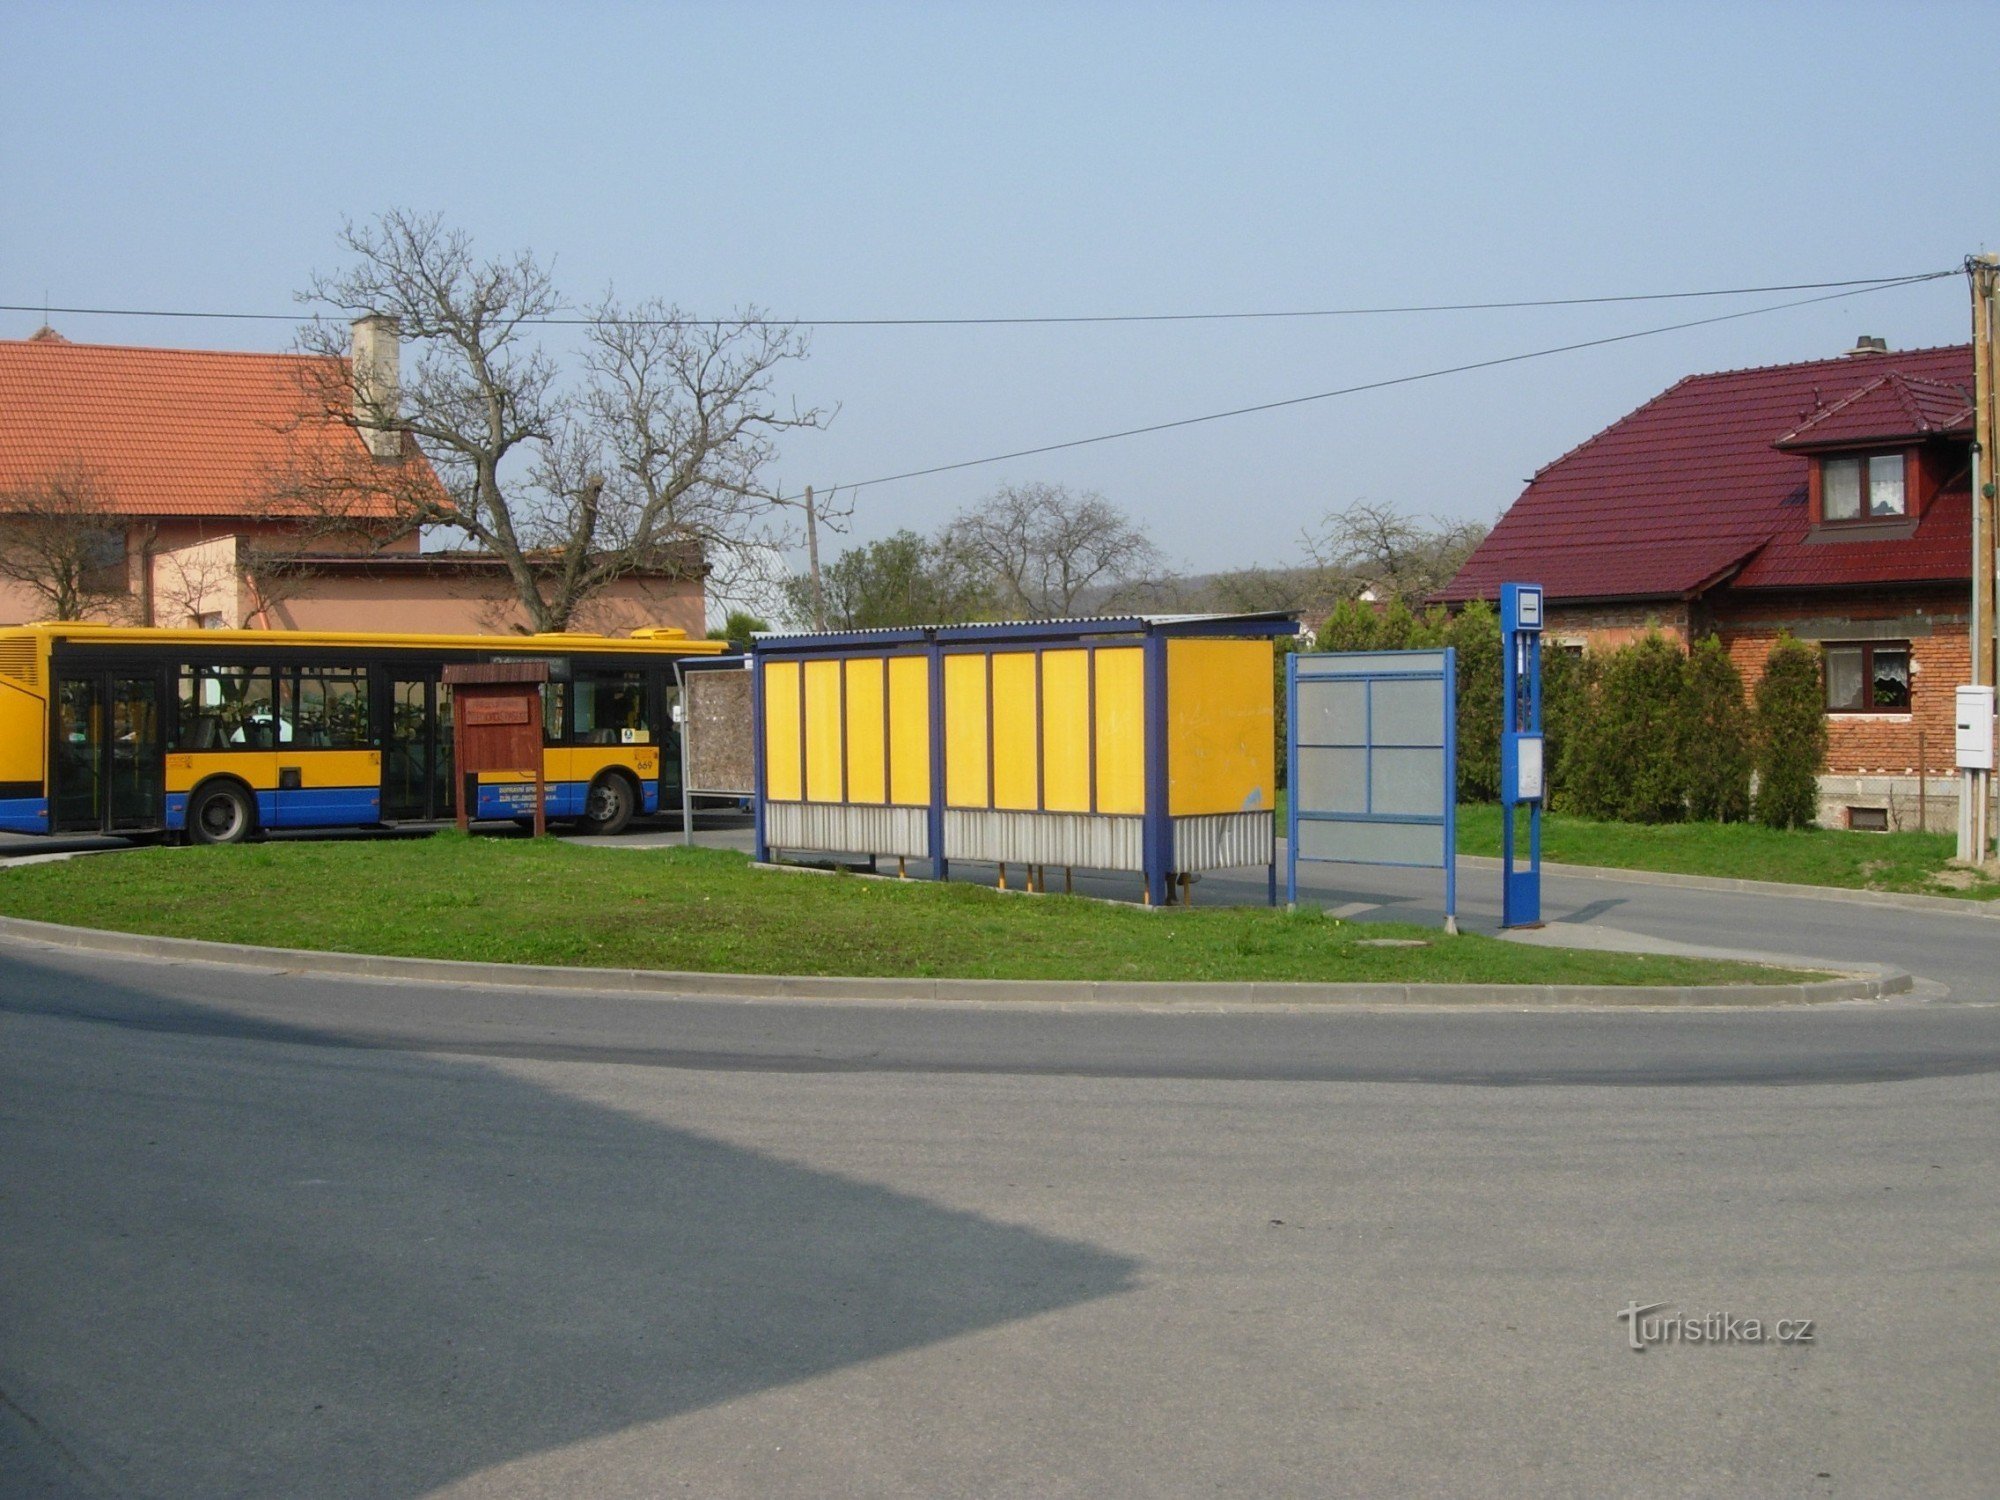 Turnpike in Jaroslavice, start of the route